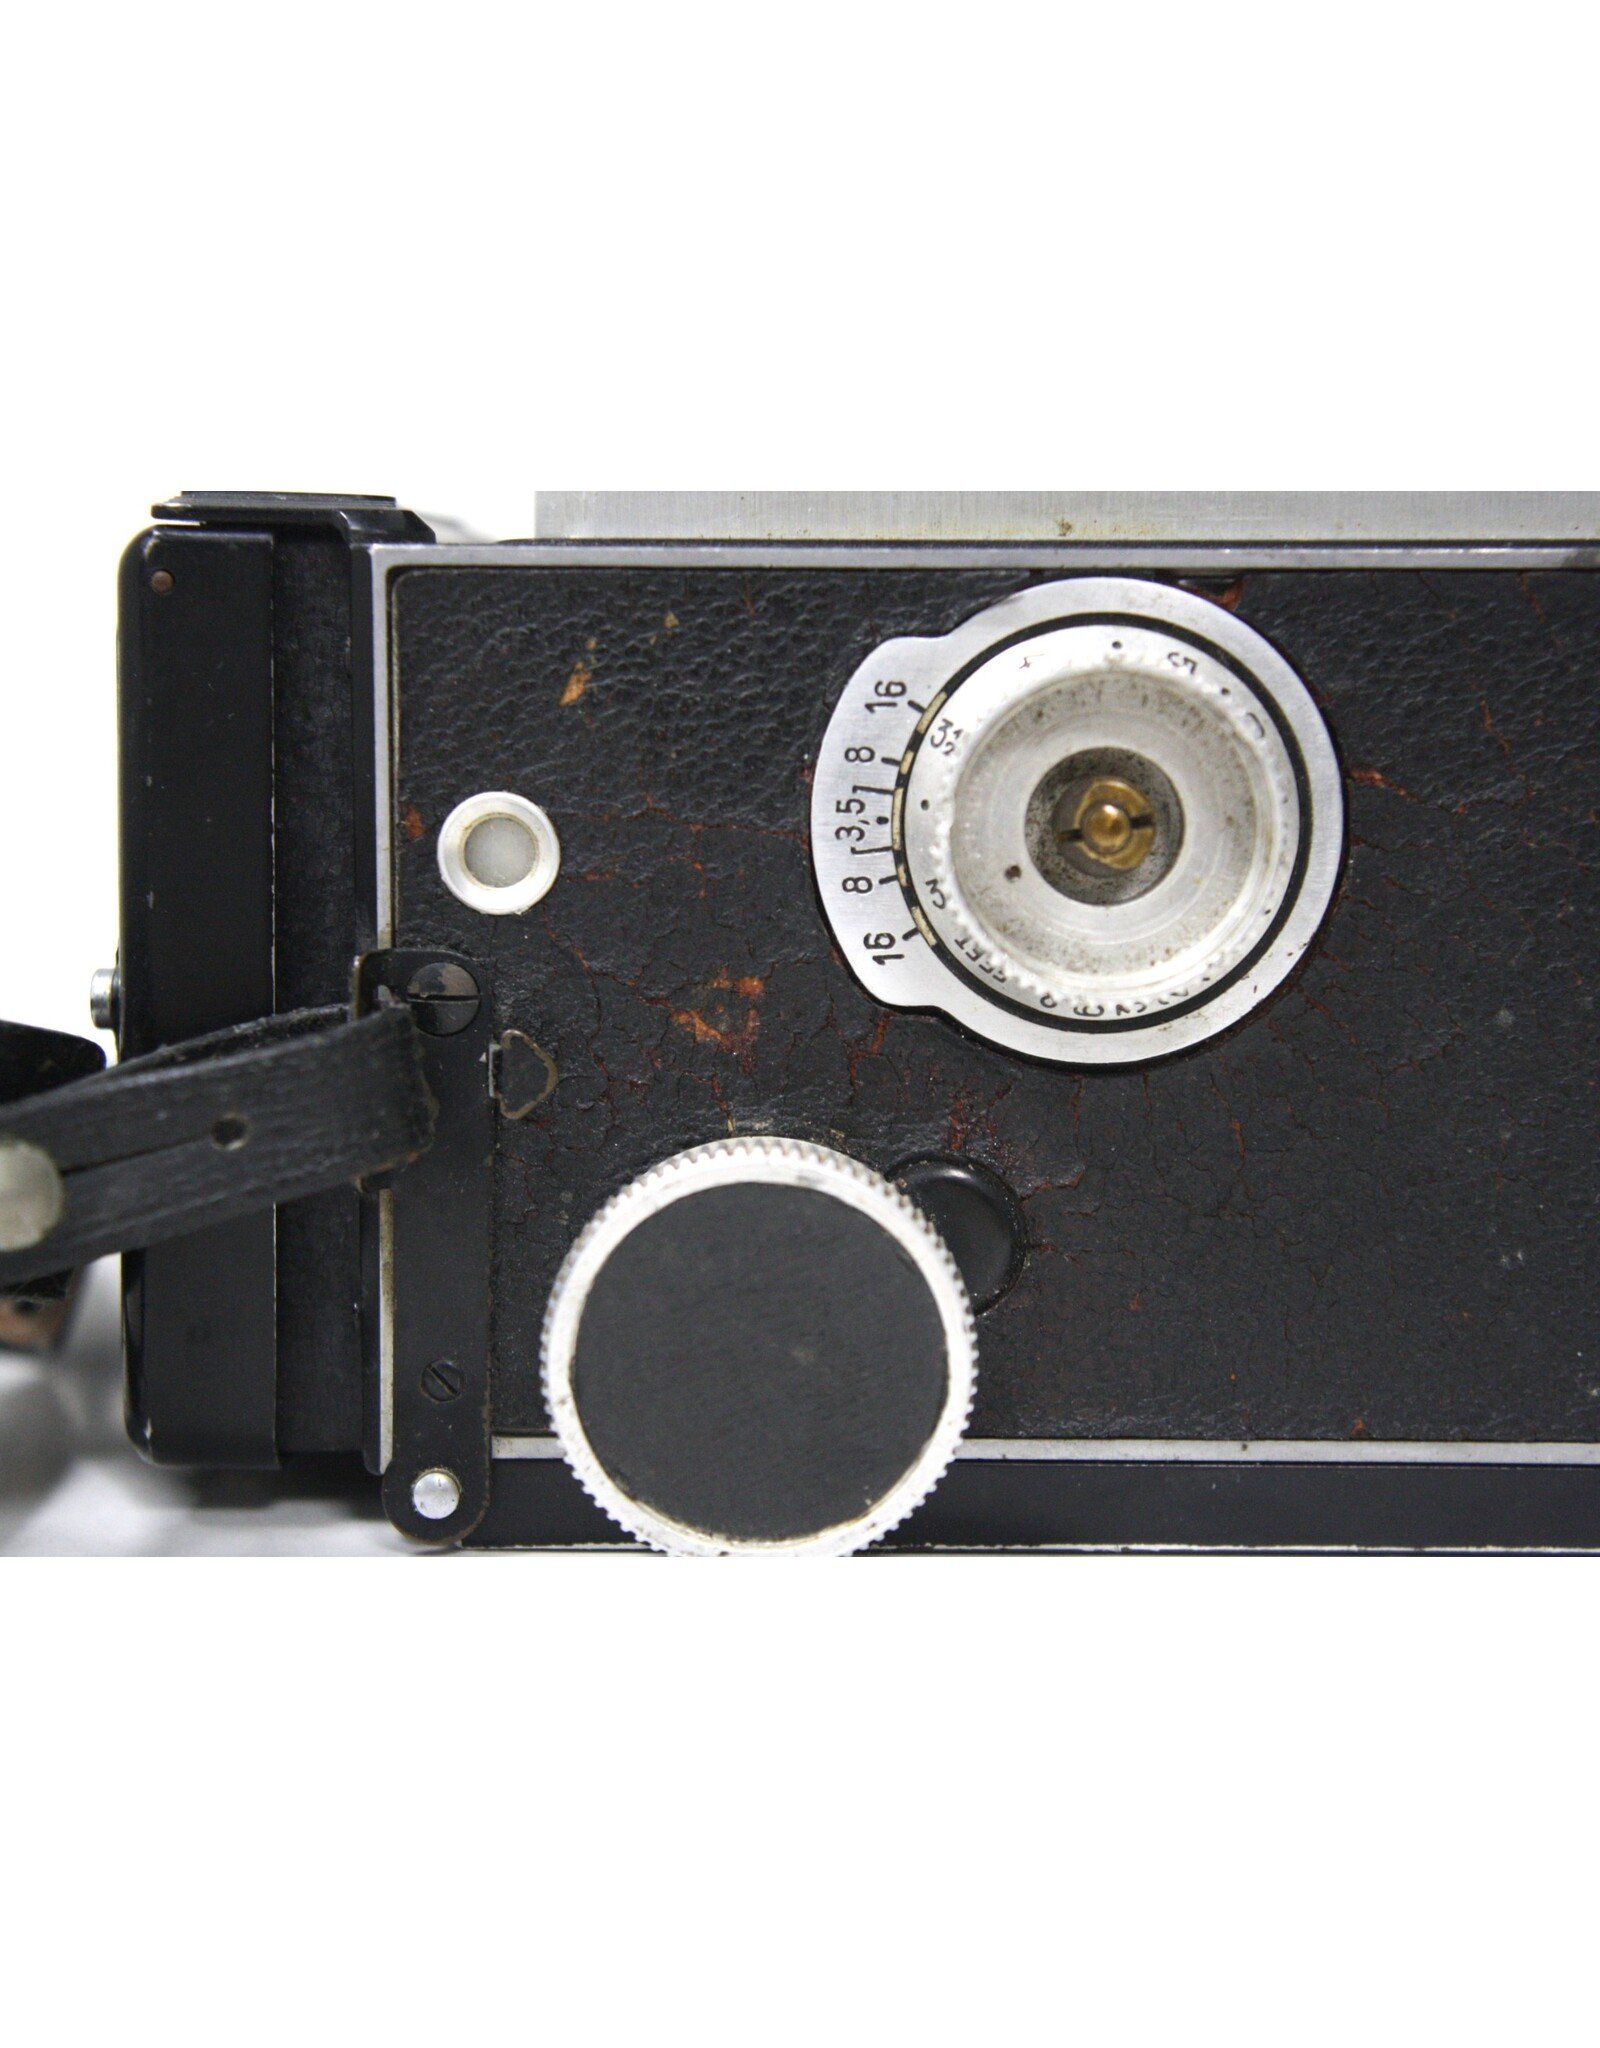 Rolleiflex Rolleicord IV TLR Film Camera Schneider Xenar 75mm f3.5 Lens (Pre-owned)